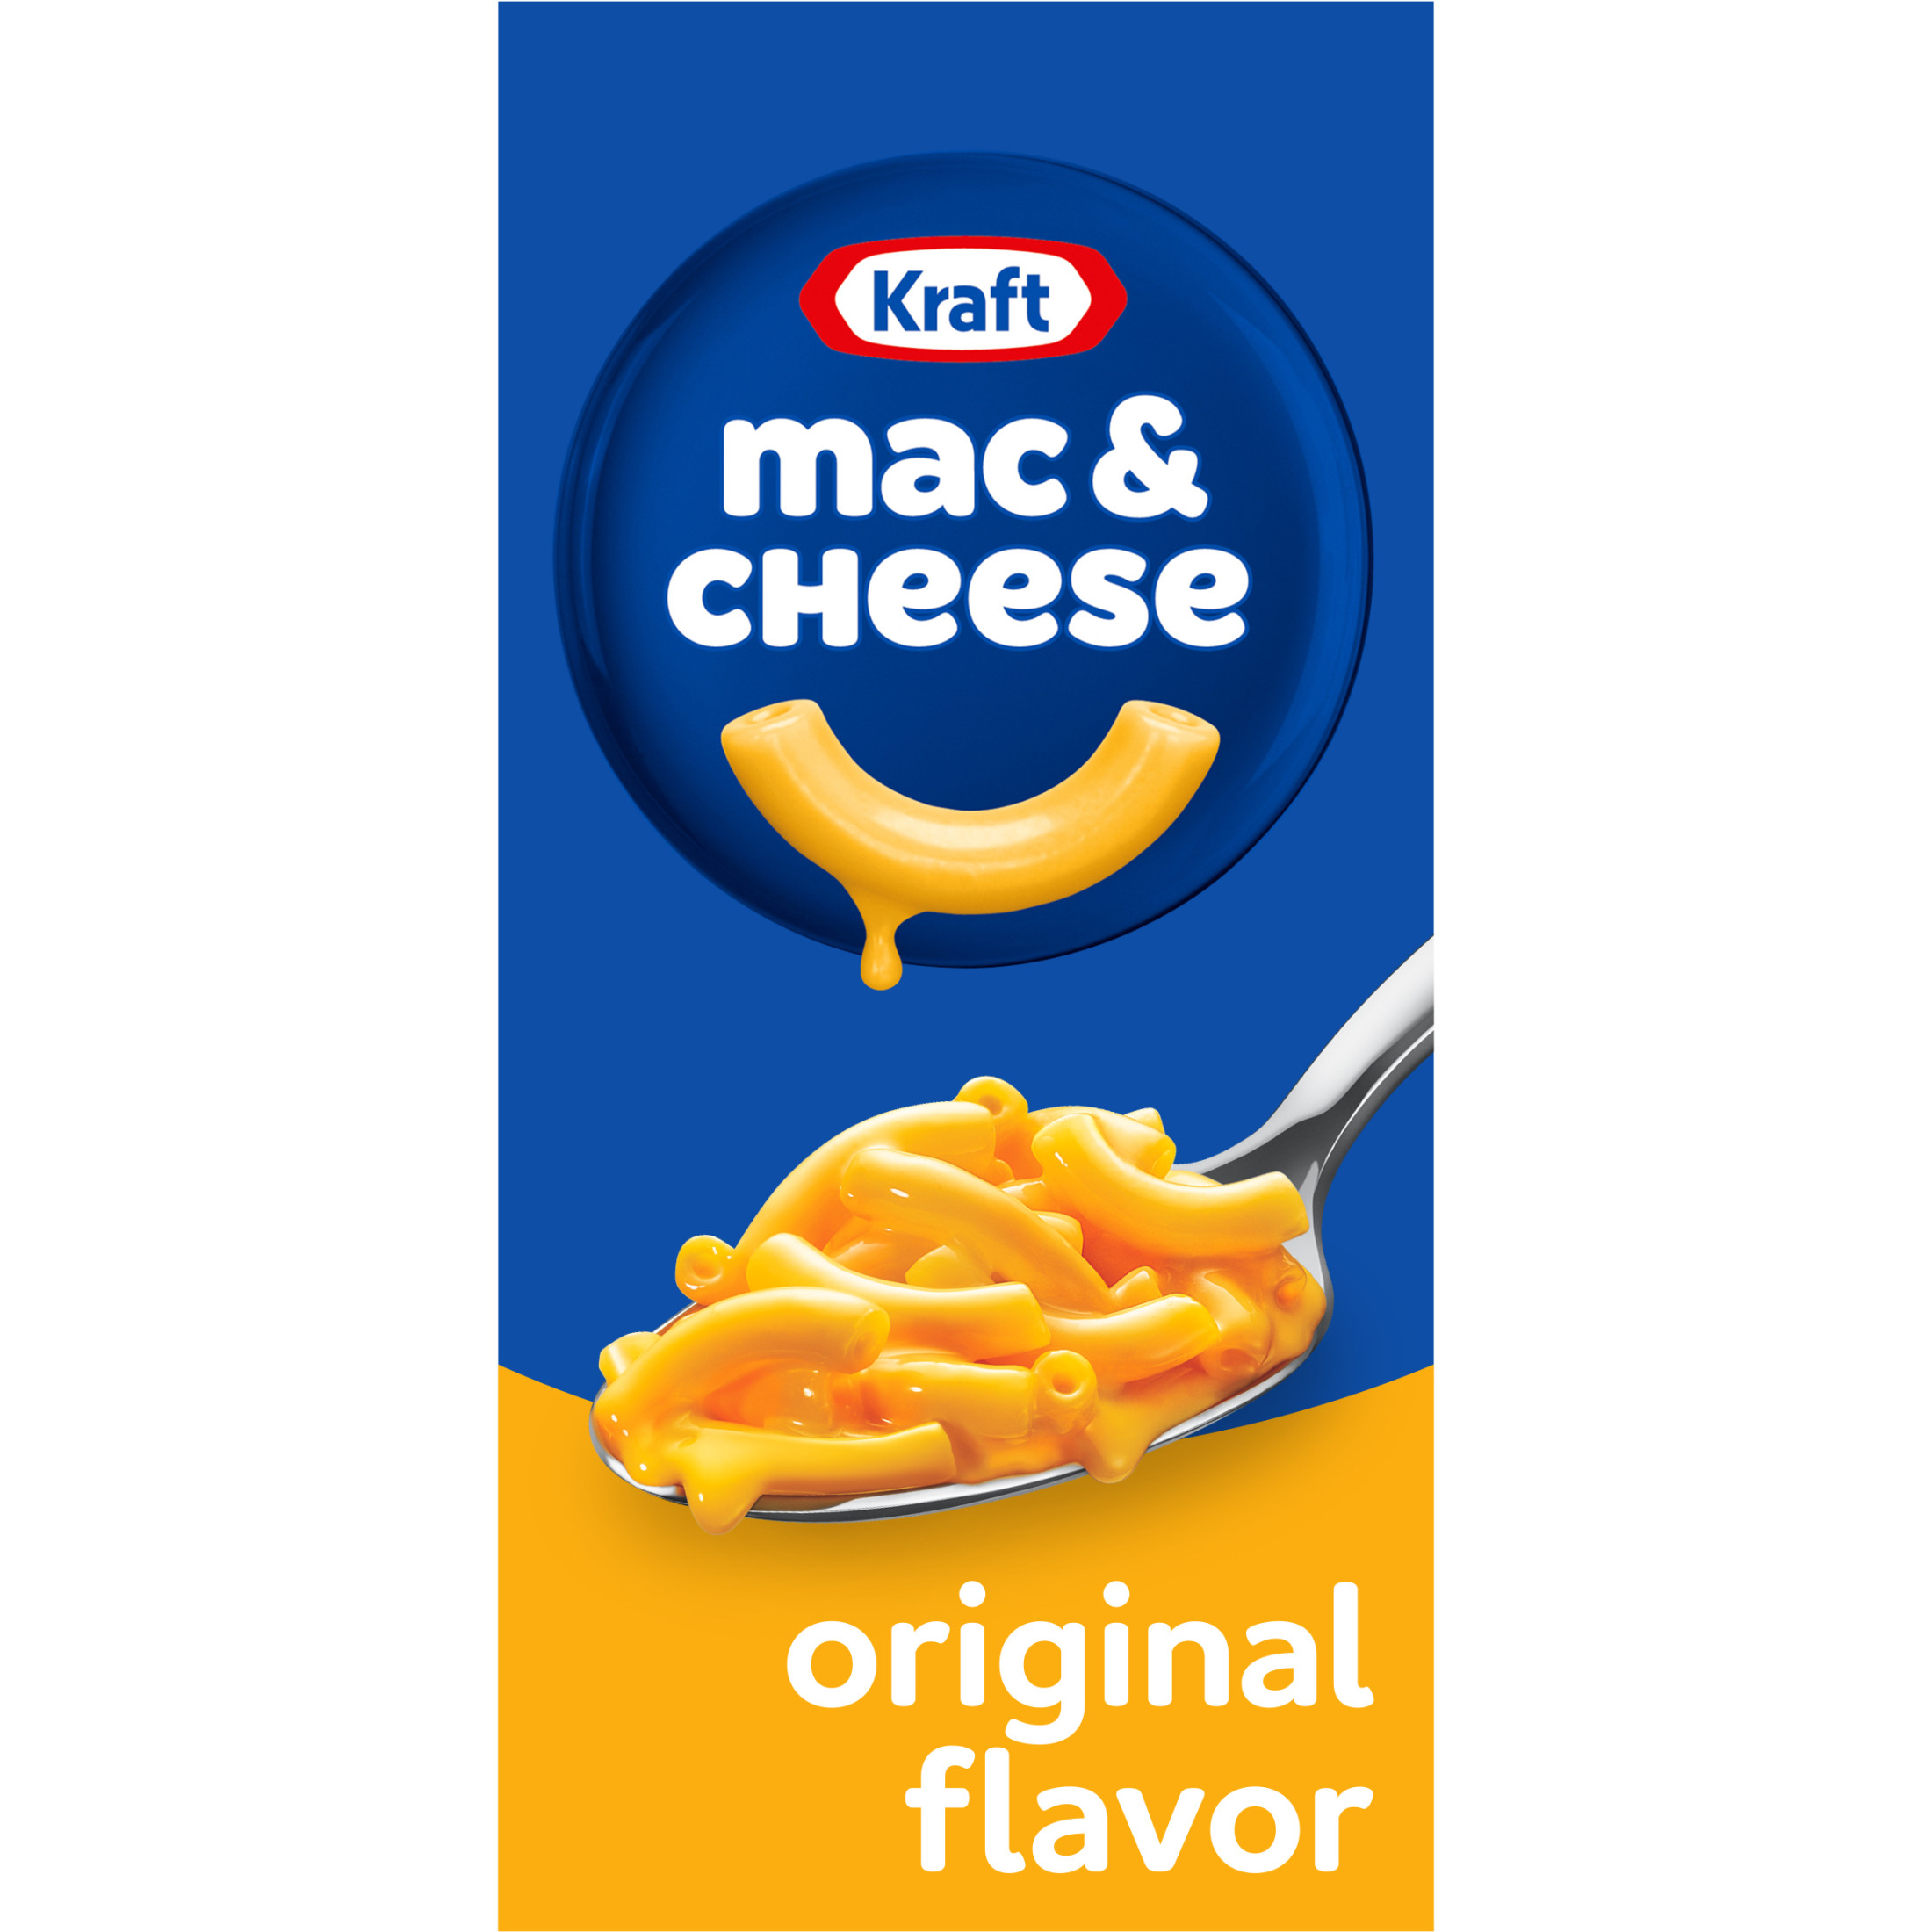 Kraft Original Mac N Cheese Macaroni and Cheese Dinner, 7.25 oz Box - image 1 of 19